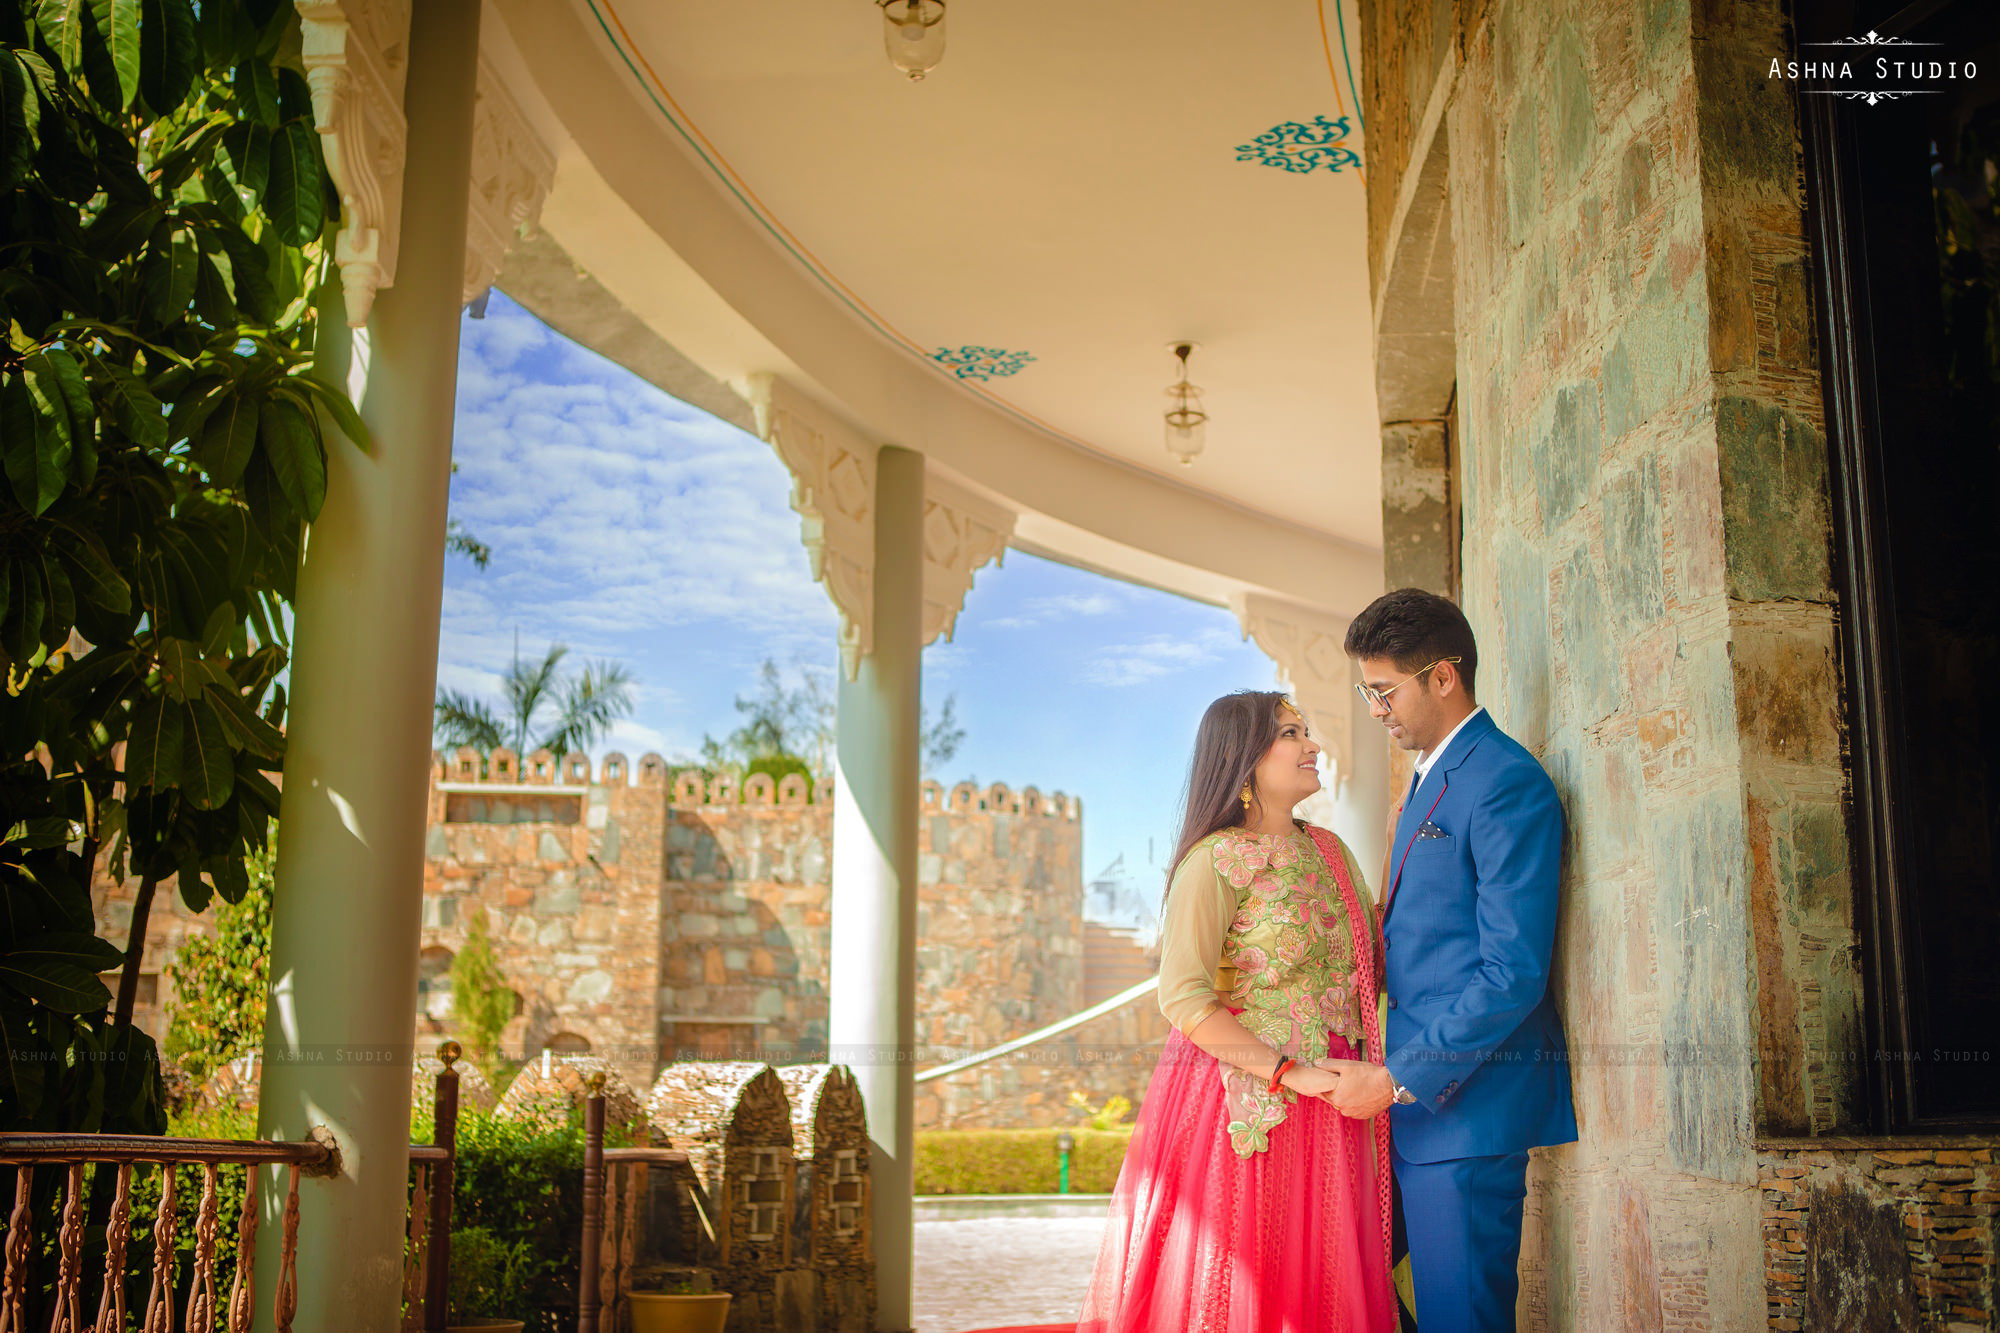 Himani & Nilesh Pre Wedding Photoshoot at The Amargarh Resort Udaipur